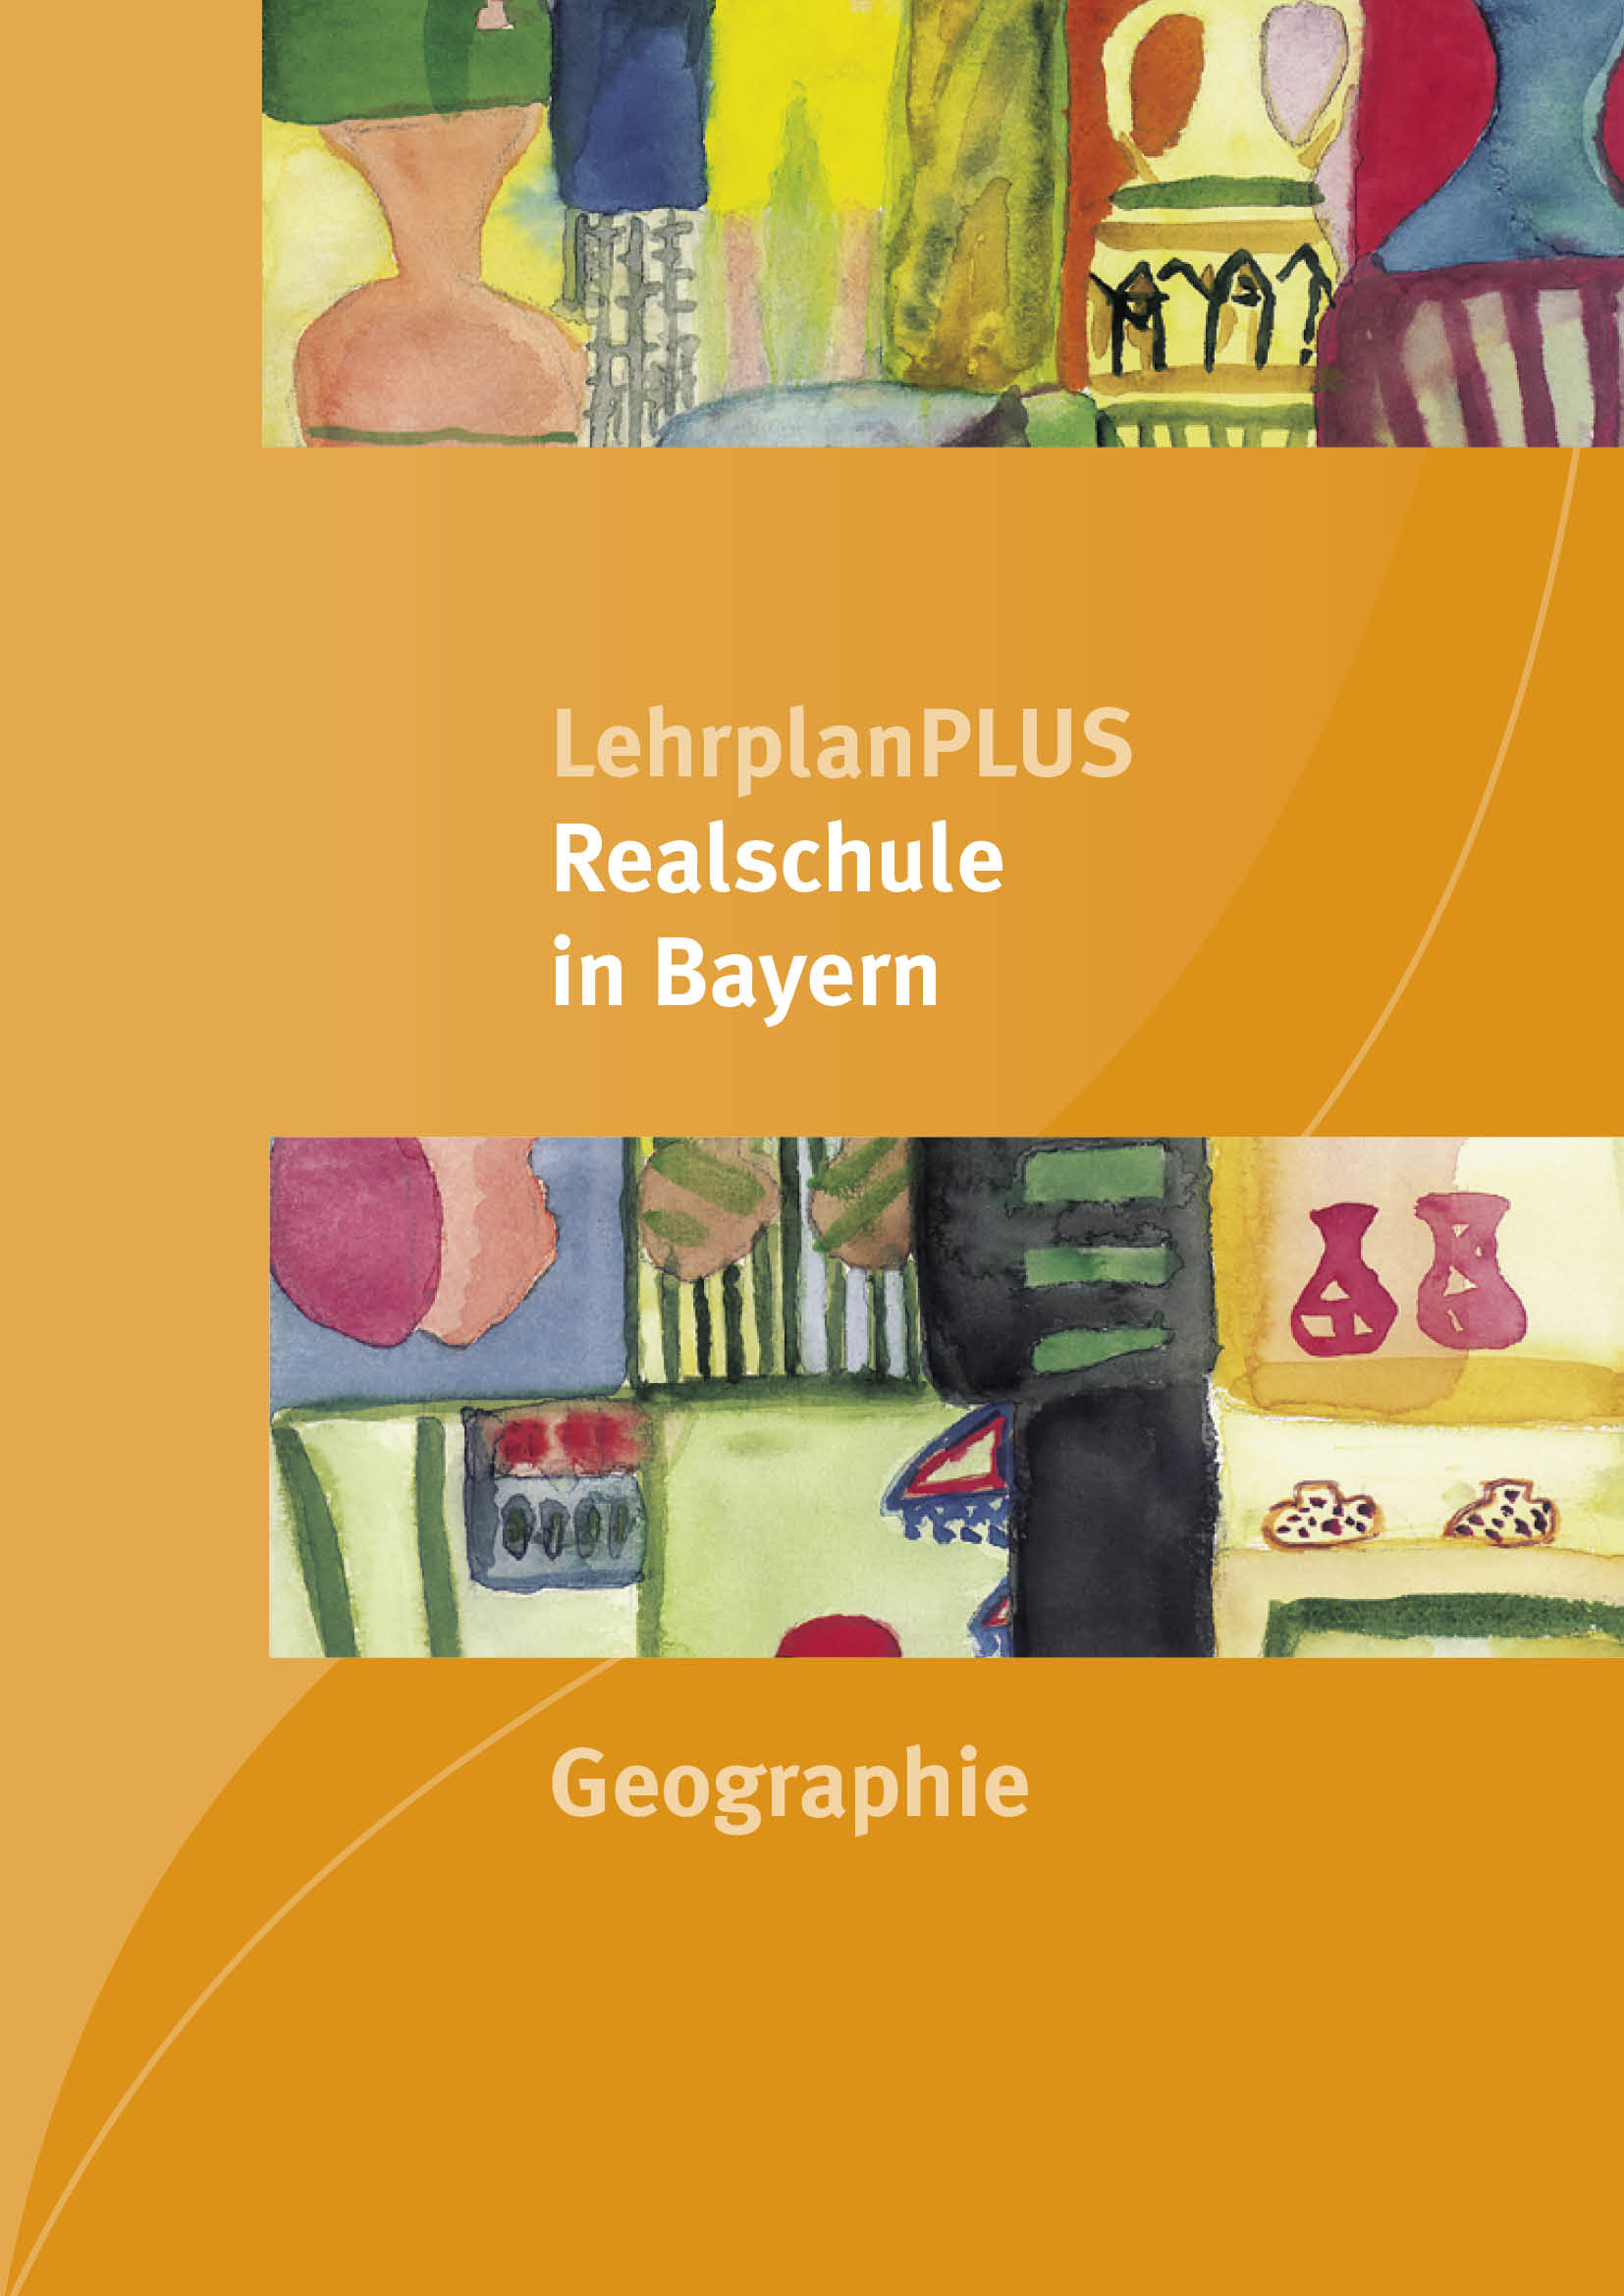 LehrplanPLUS Realschule in Bayern - Geographie